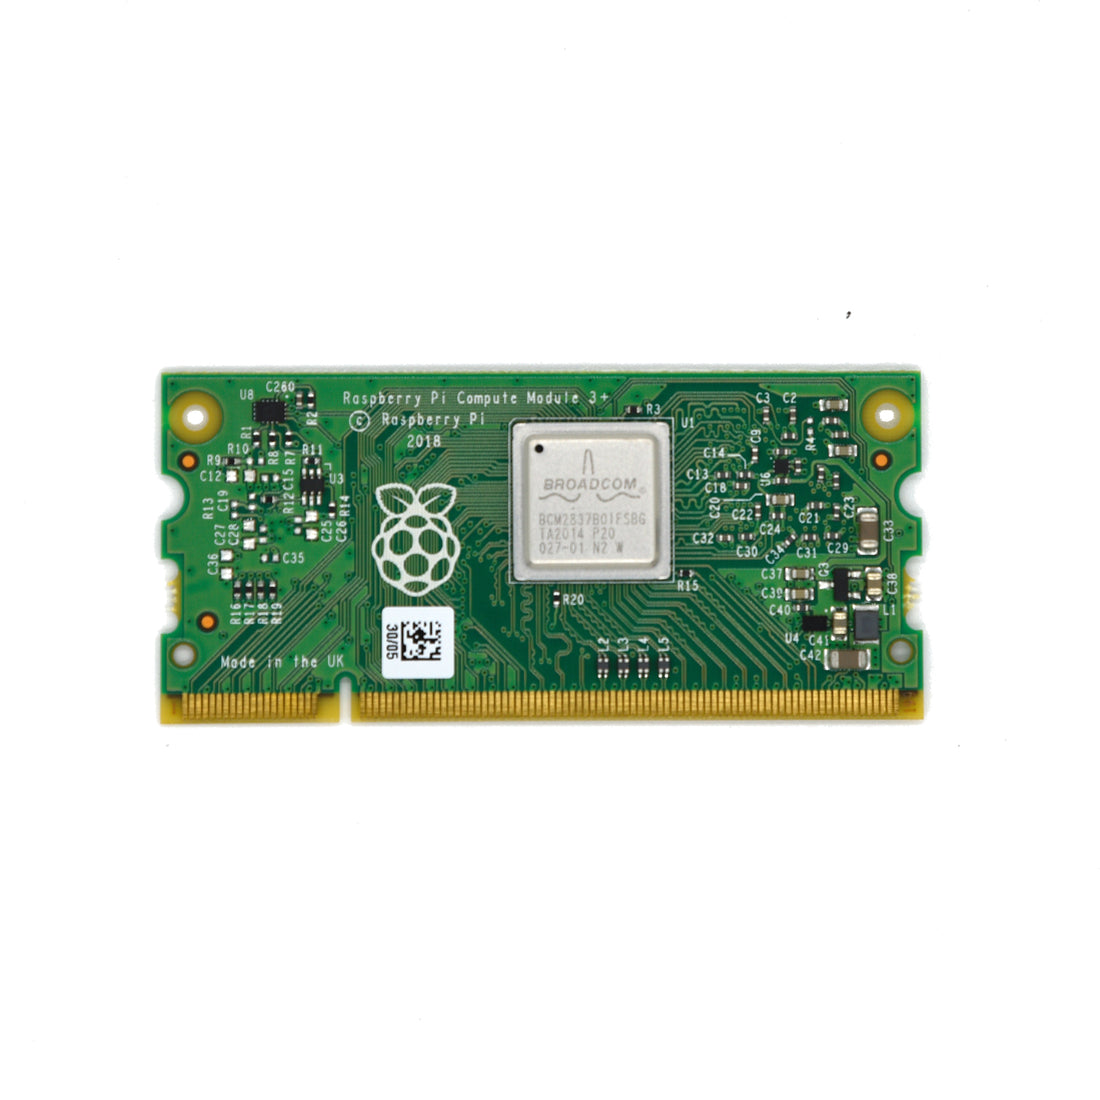 Raspberry Pi Compute Module 3+ 16GB (CM3+ 16GB)